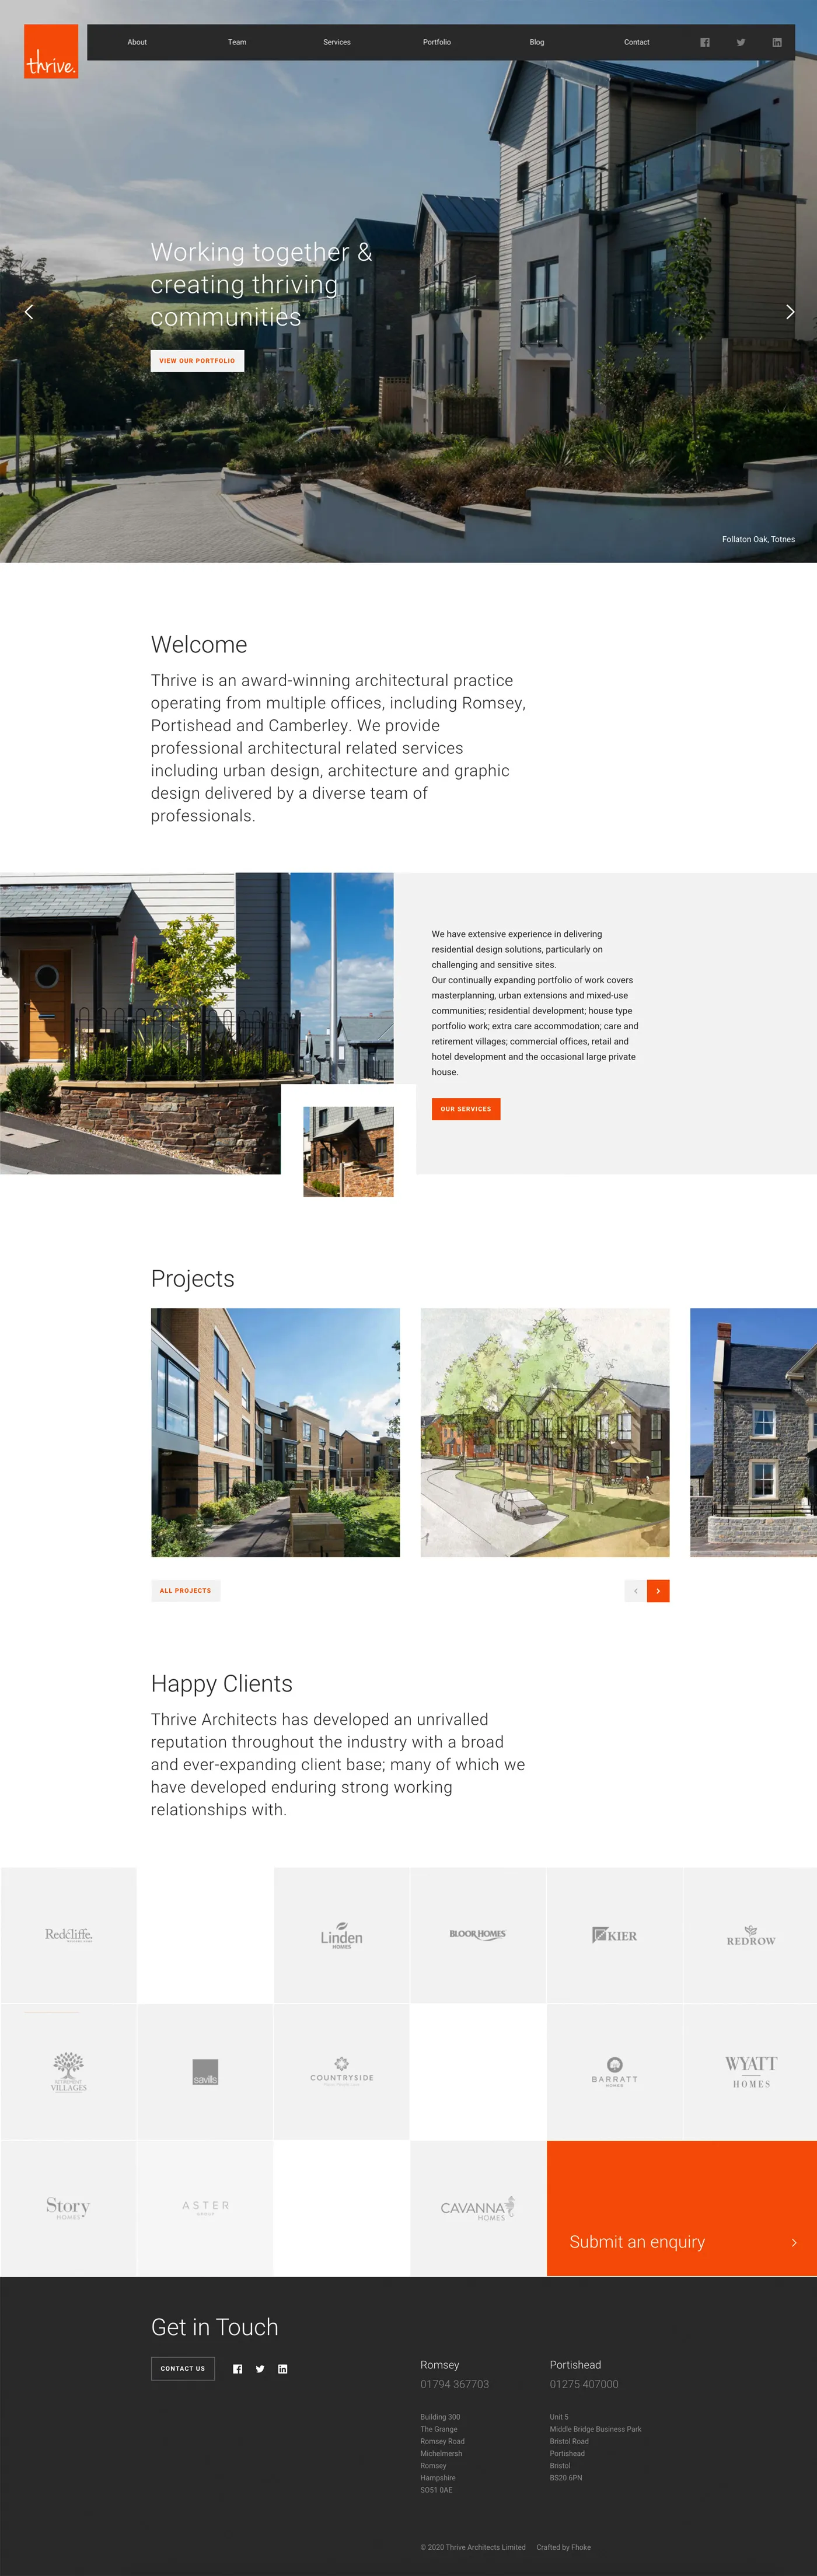 Thrive Architects WordPress website designed by web design agency Fhoke.